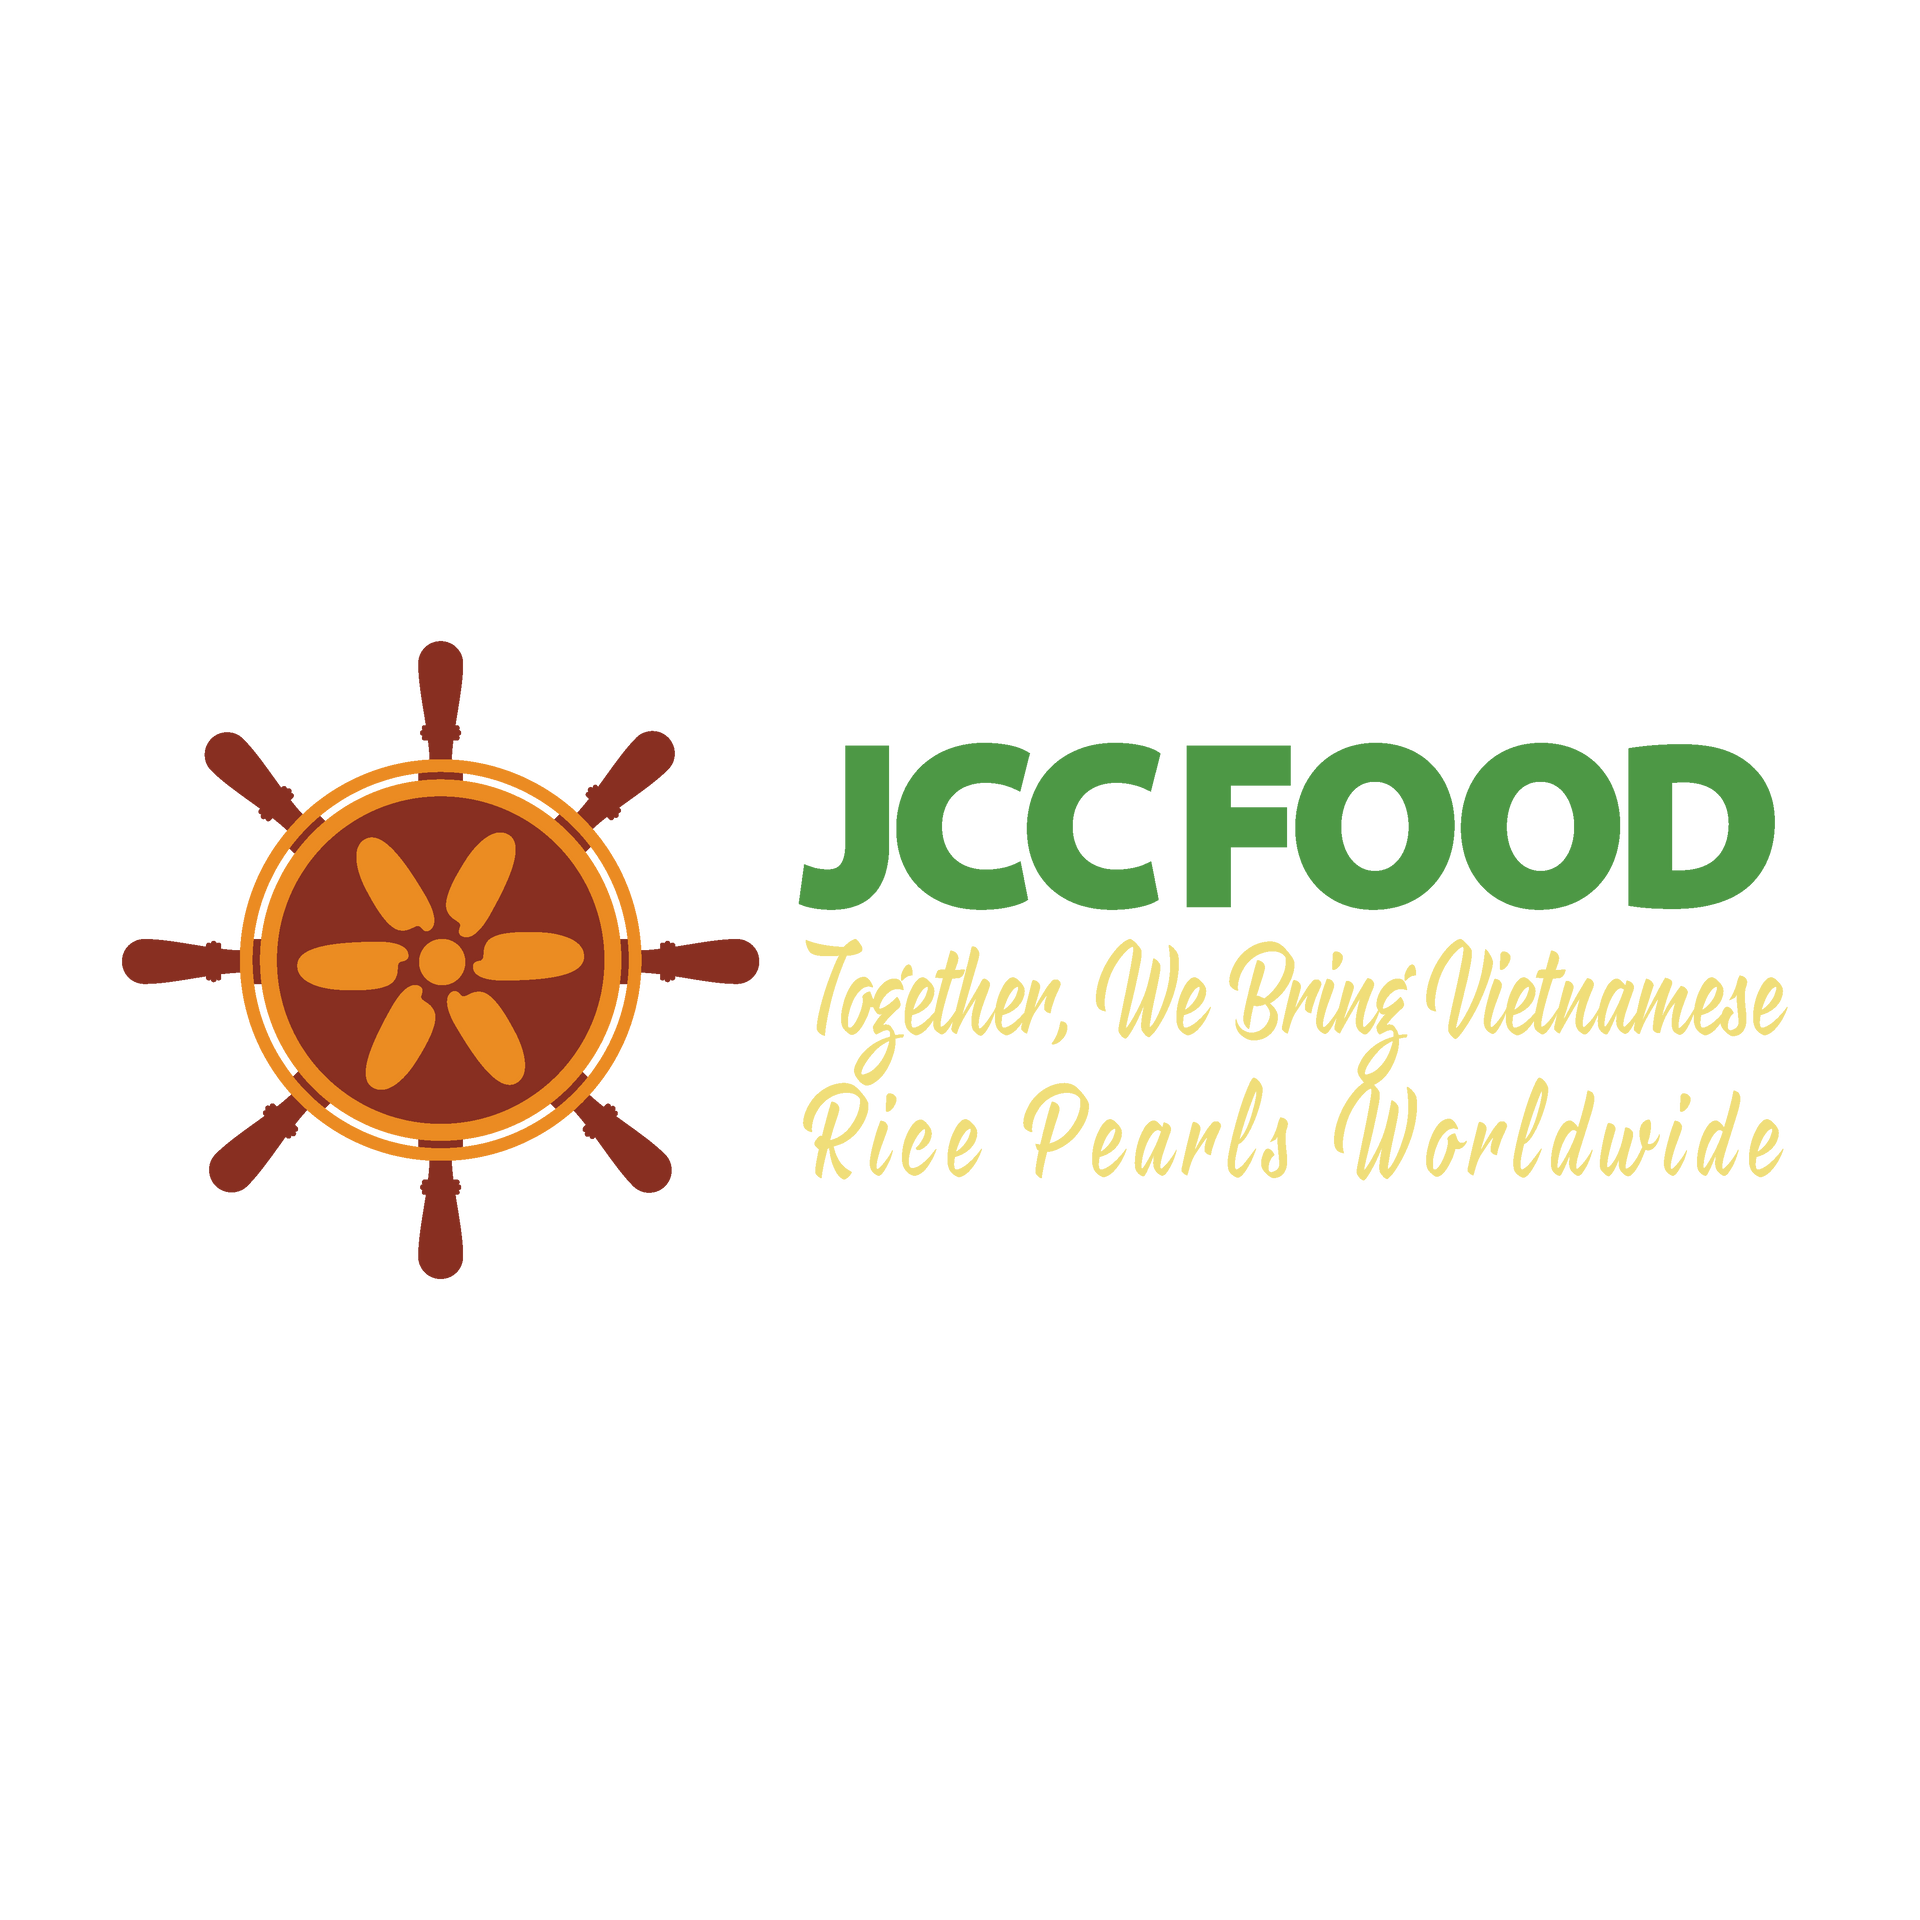 JCC Food Foodstuff Corp logo